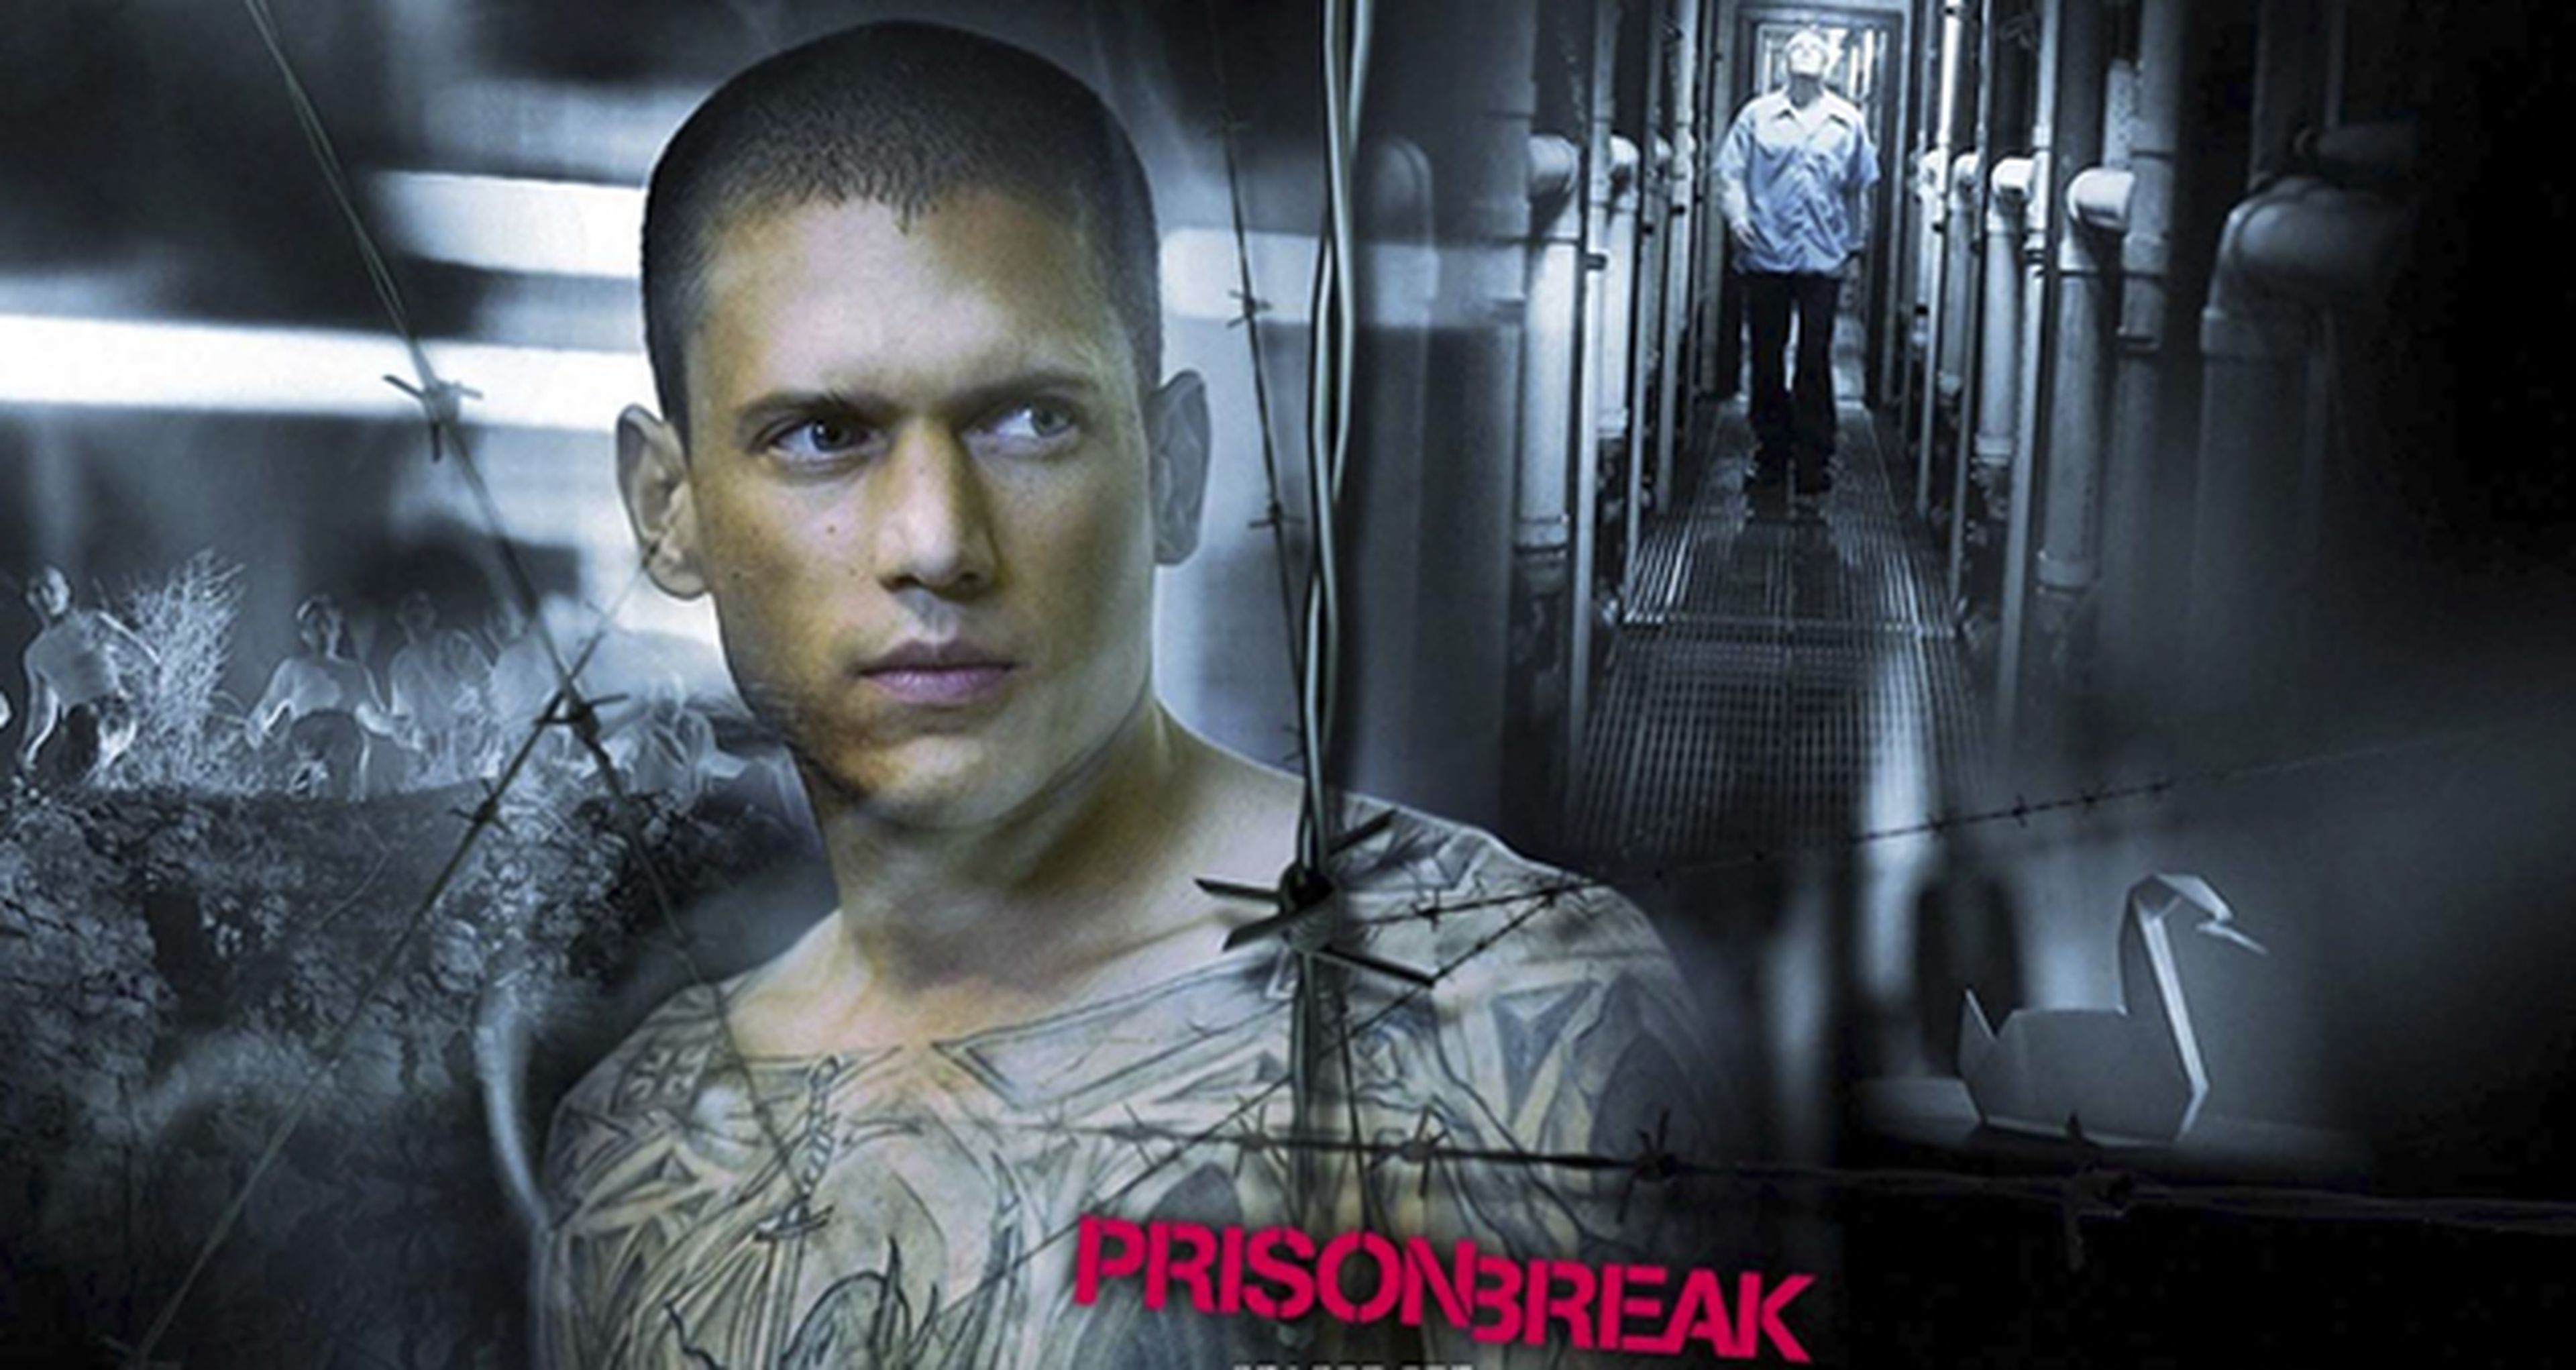 Prison Break vuelve a Fox con Wenworth Miller y Dominic Purcell